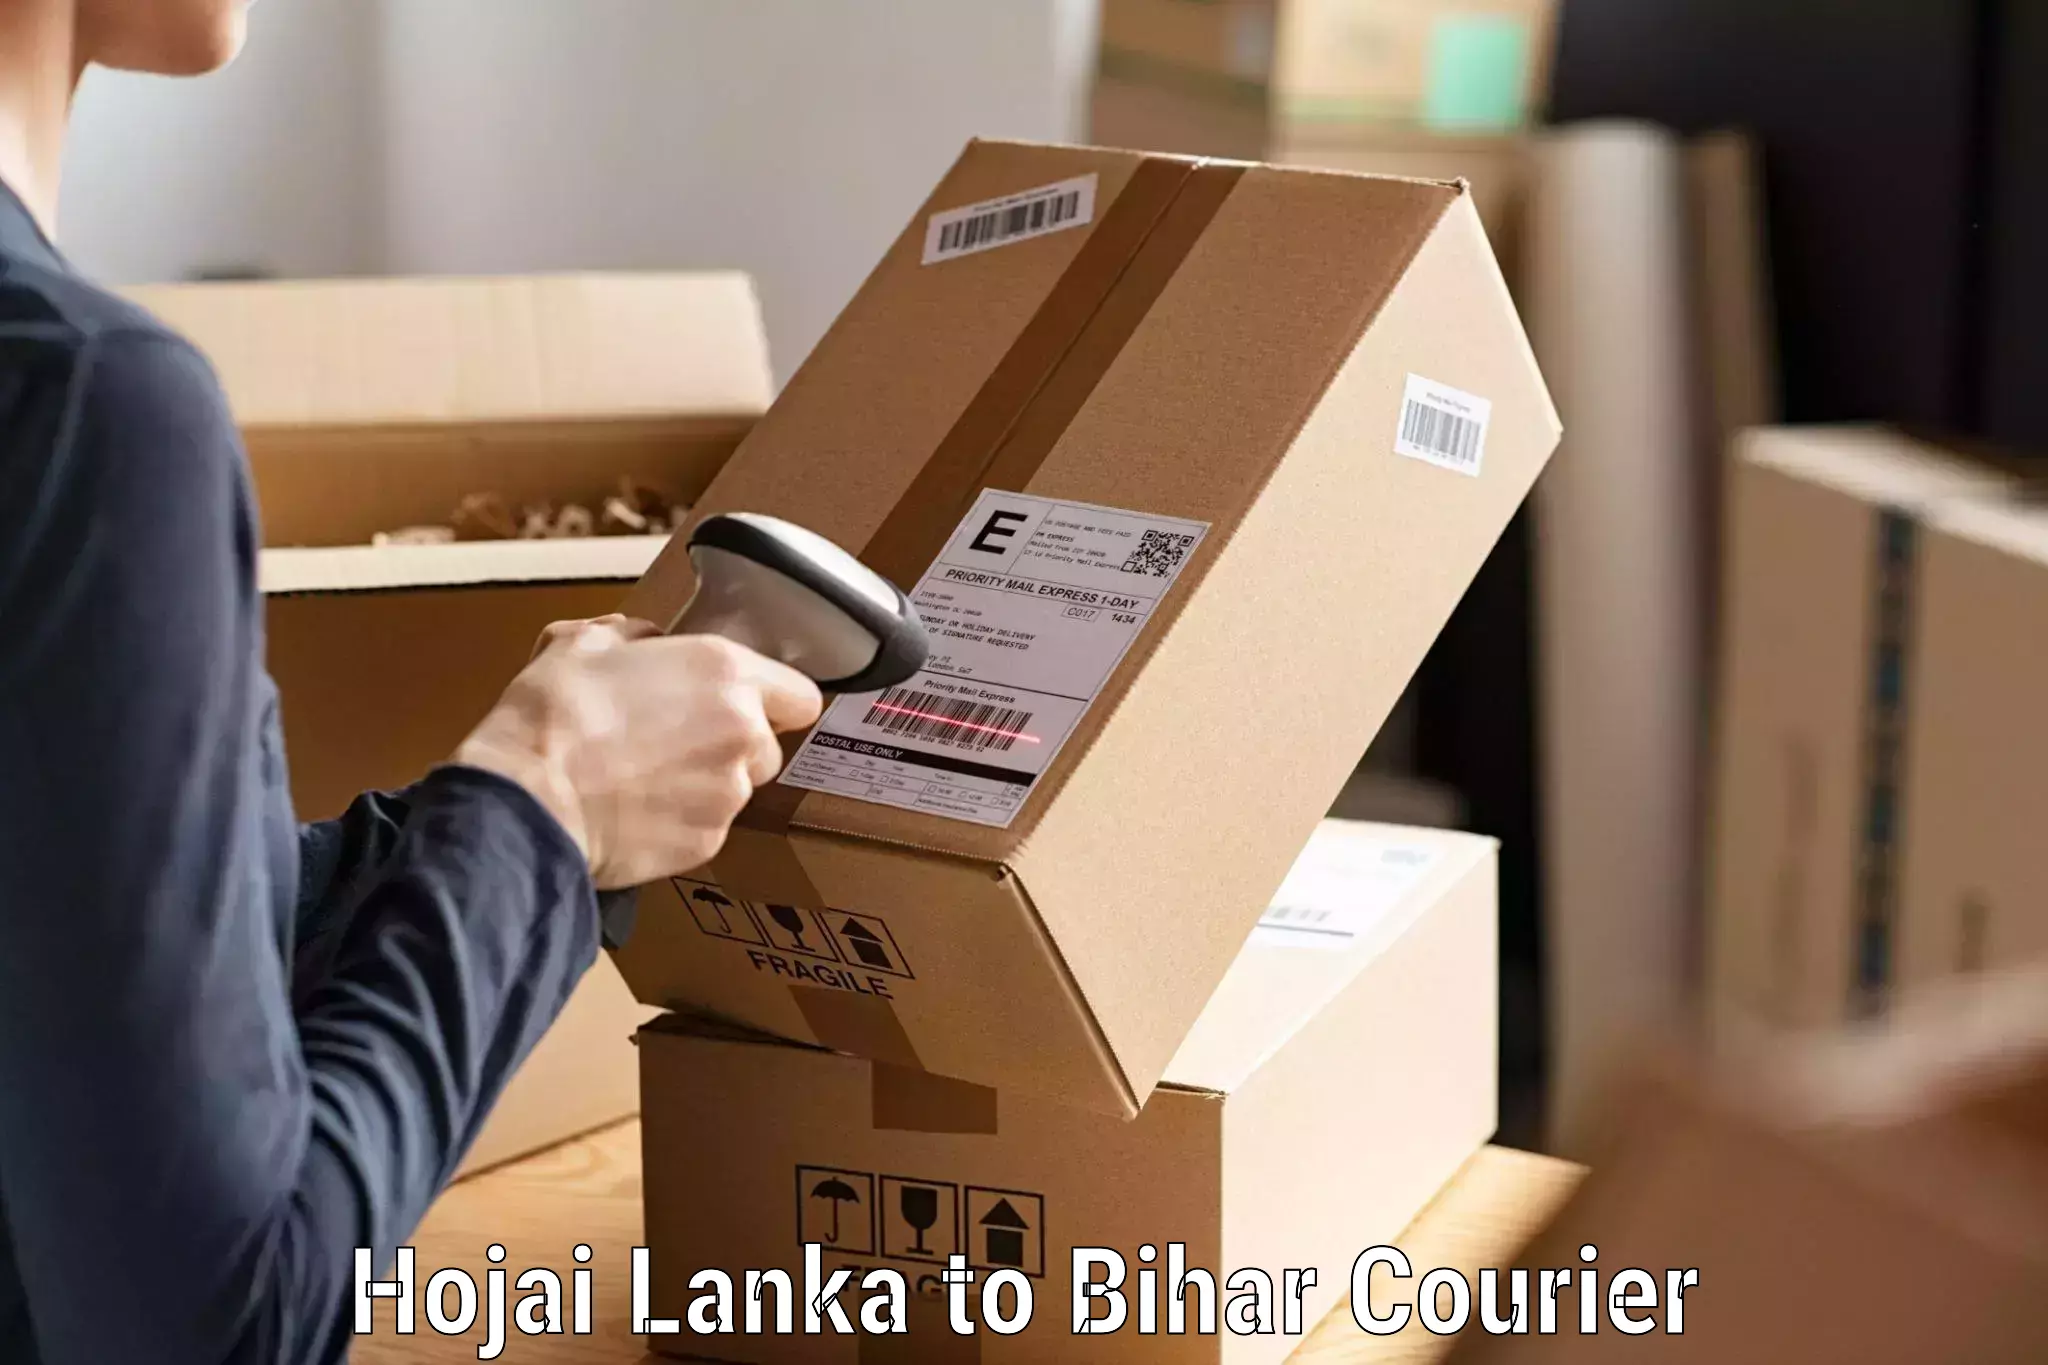 Local courier options Hojai Lanka to Saraiya